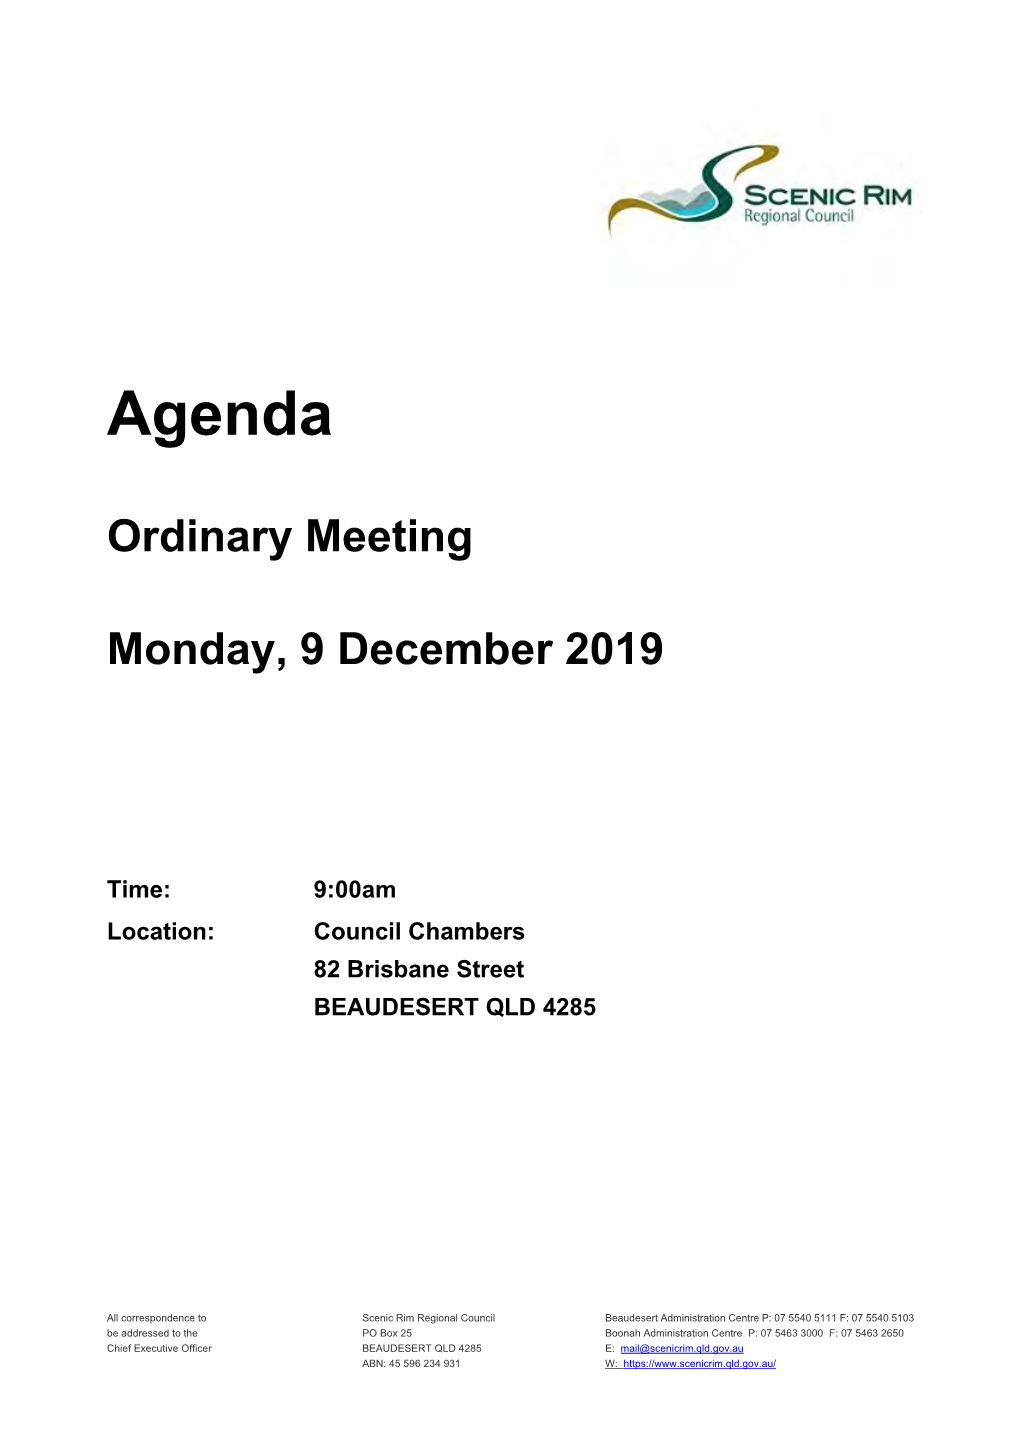 Agenda of Ordinary Meeting